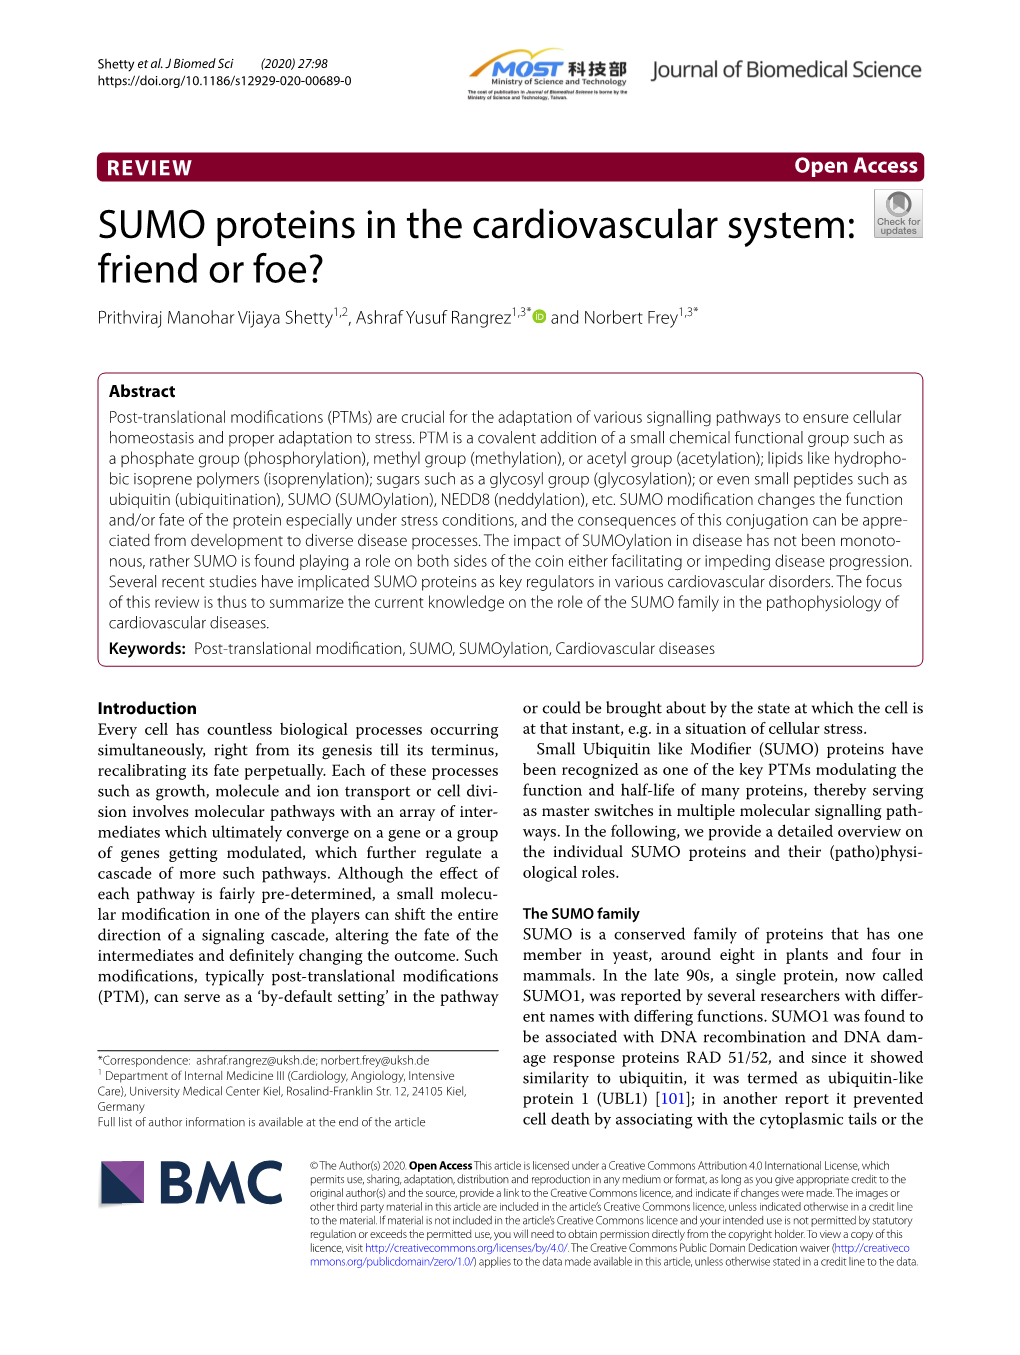 SUMO Proteins in the Cardiovascular System: Friend Or Foe? Prithviraj Manohar Vijaya Shetty1,2, Ashraf Yusuf Rangrez1,3* and Norbert Frey1,3*